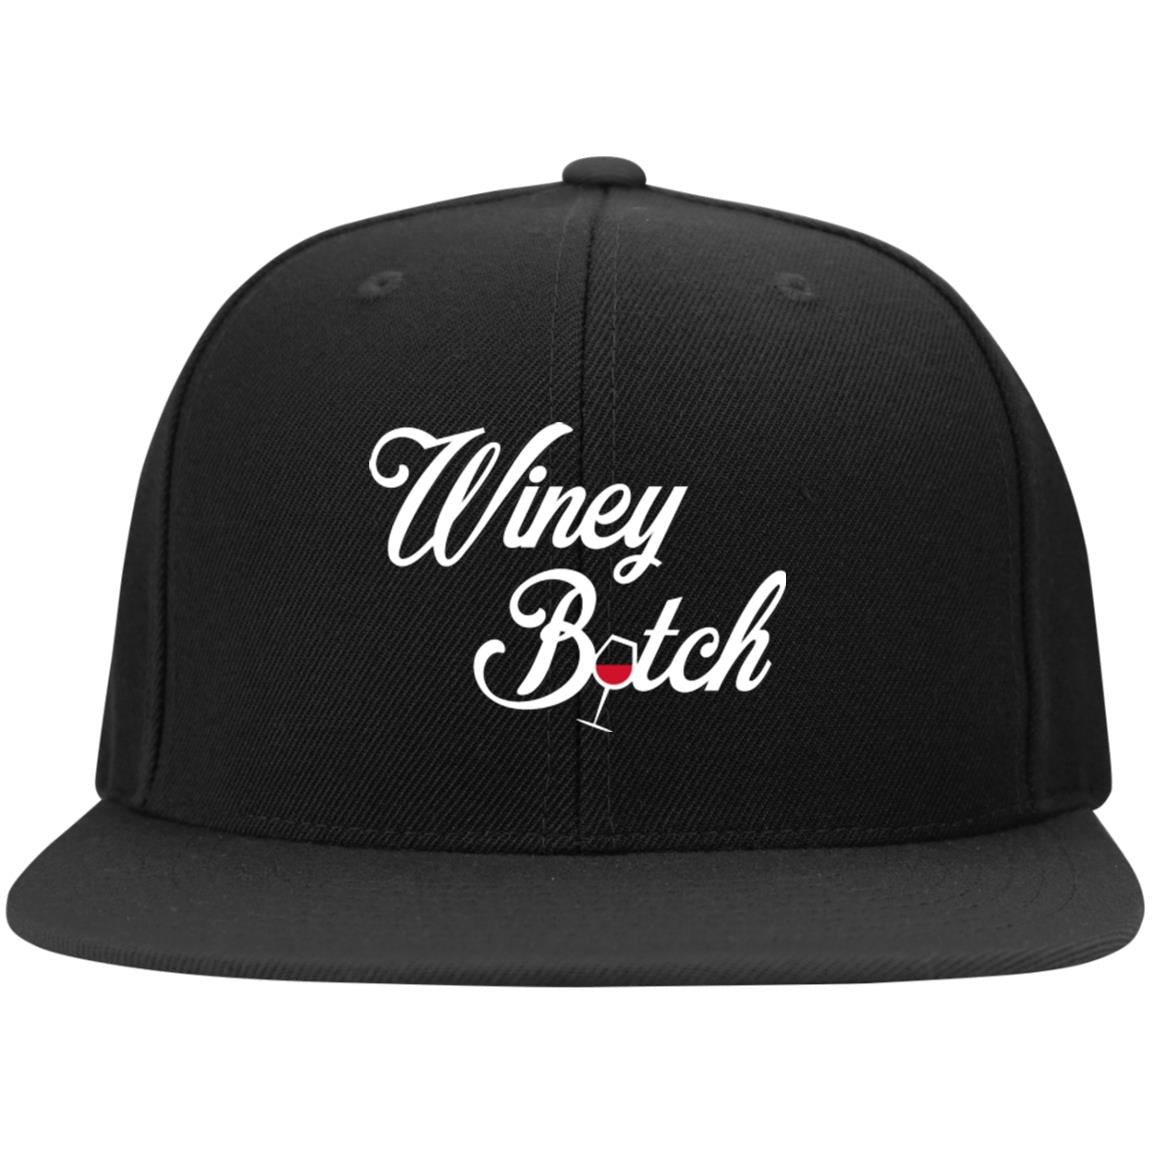 Winey Bitch - Snapback Hat